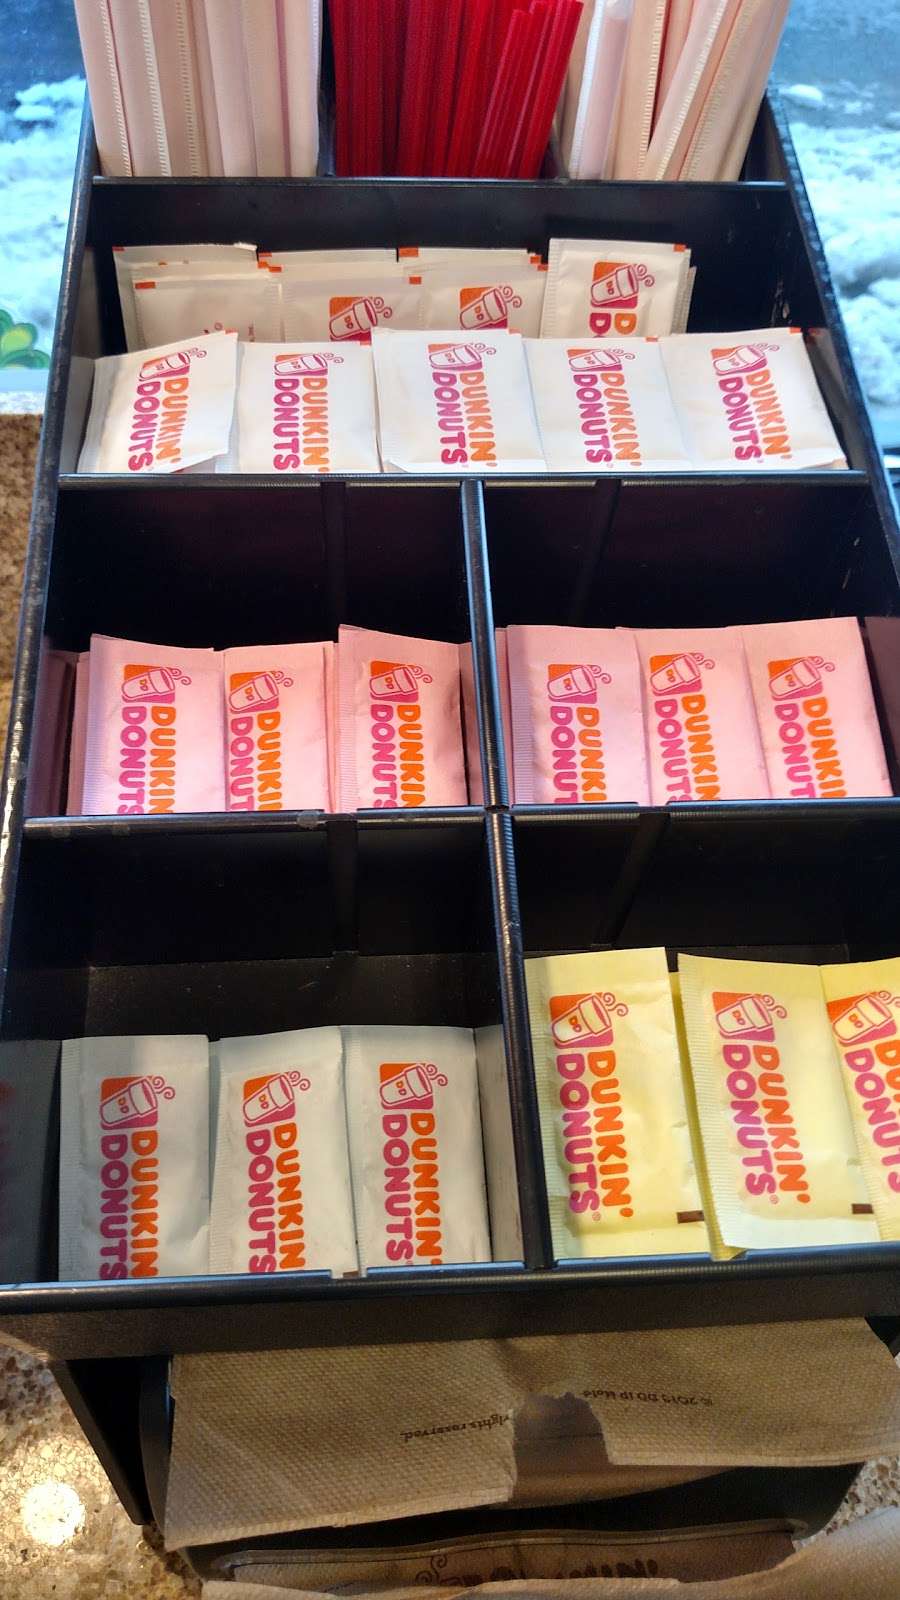 Dunkin Donuts | 1 Glen Cove Rd, Greenvale, NY 11548 | Phone: (516) 625-6081